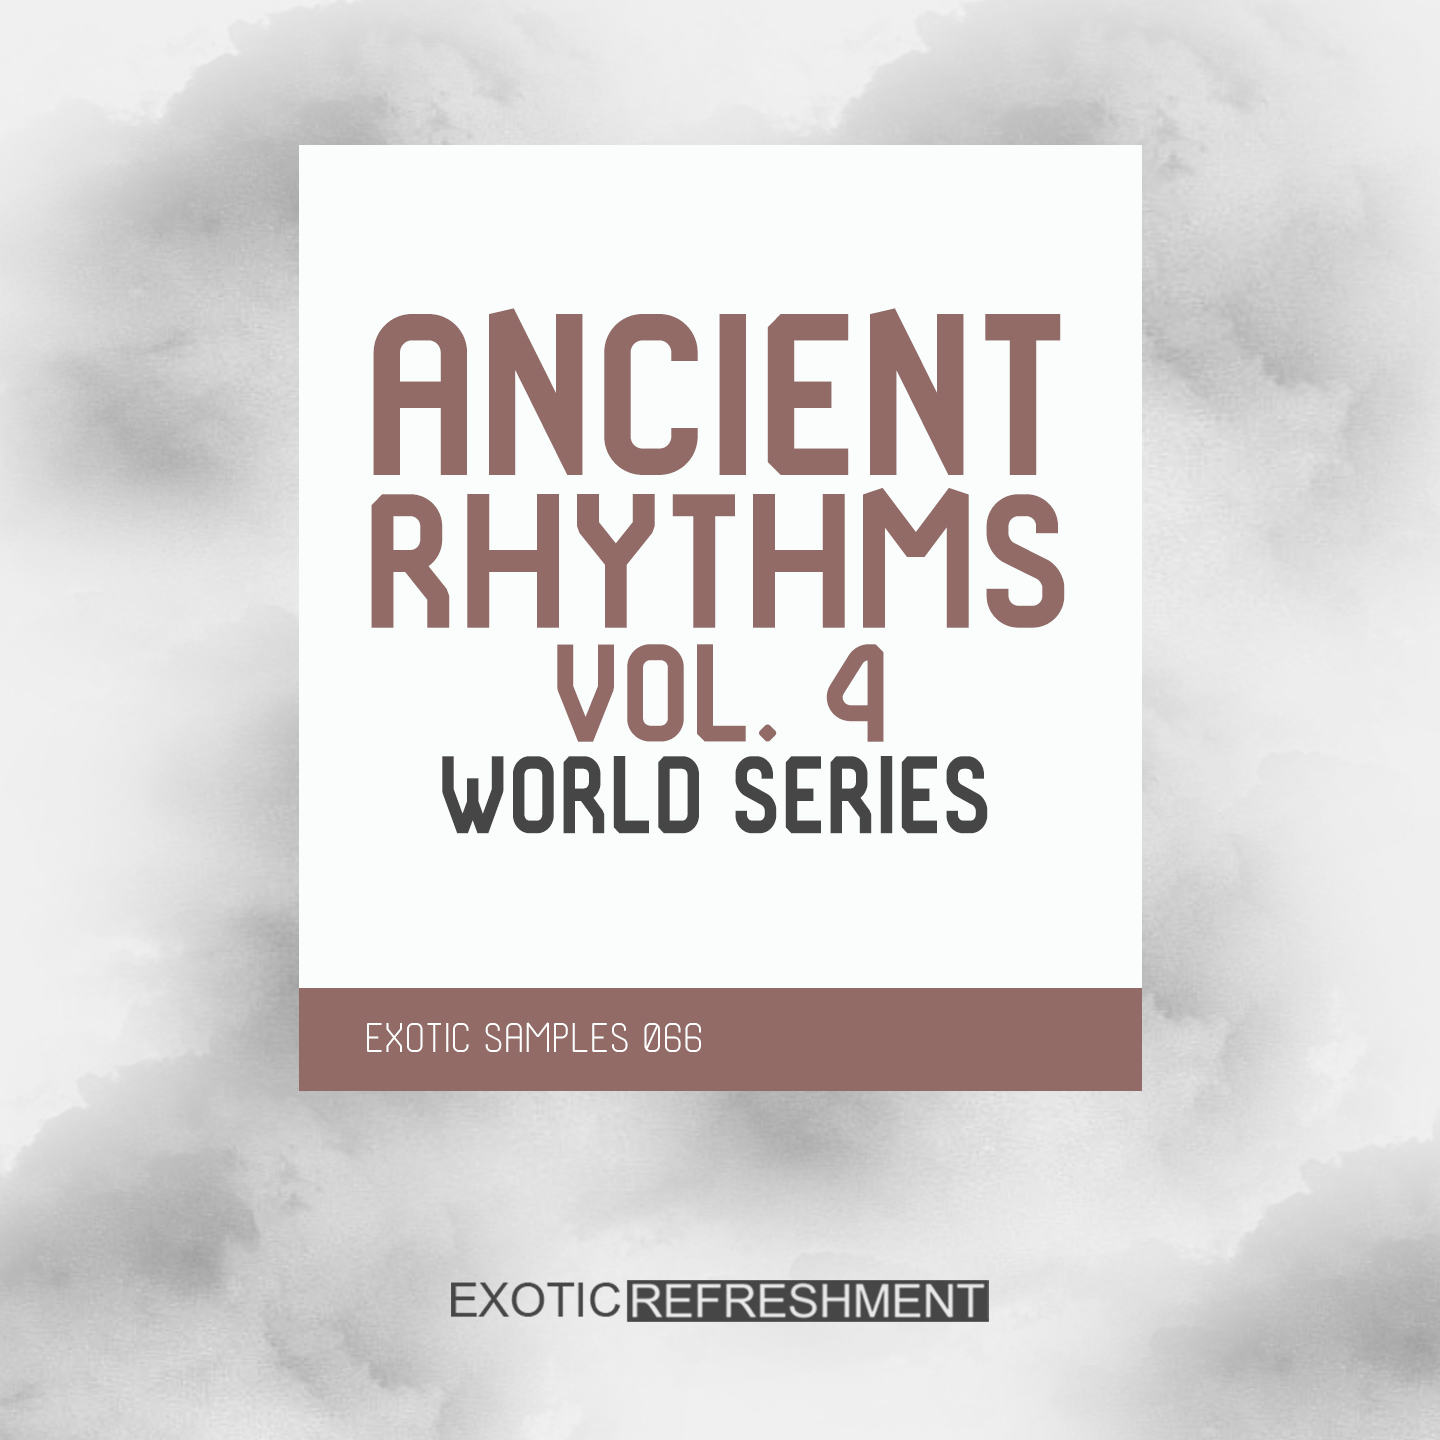 Ancient Rhythms 4 - World Series